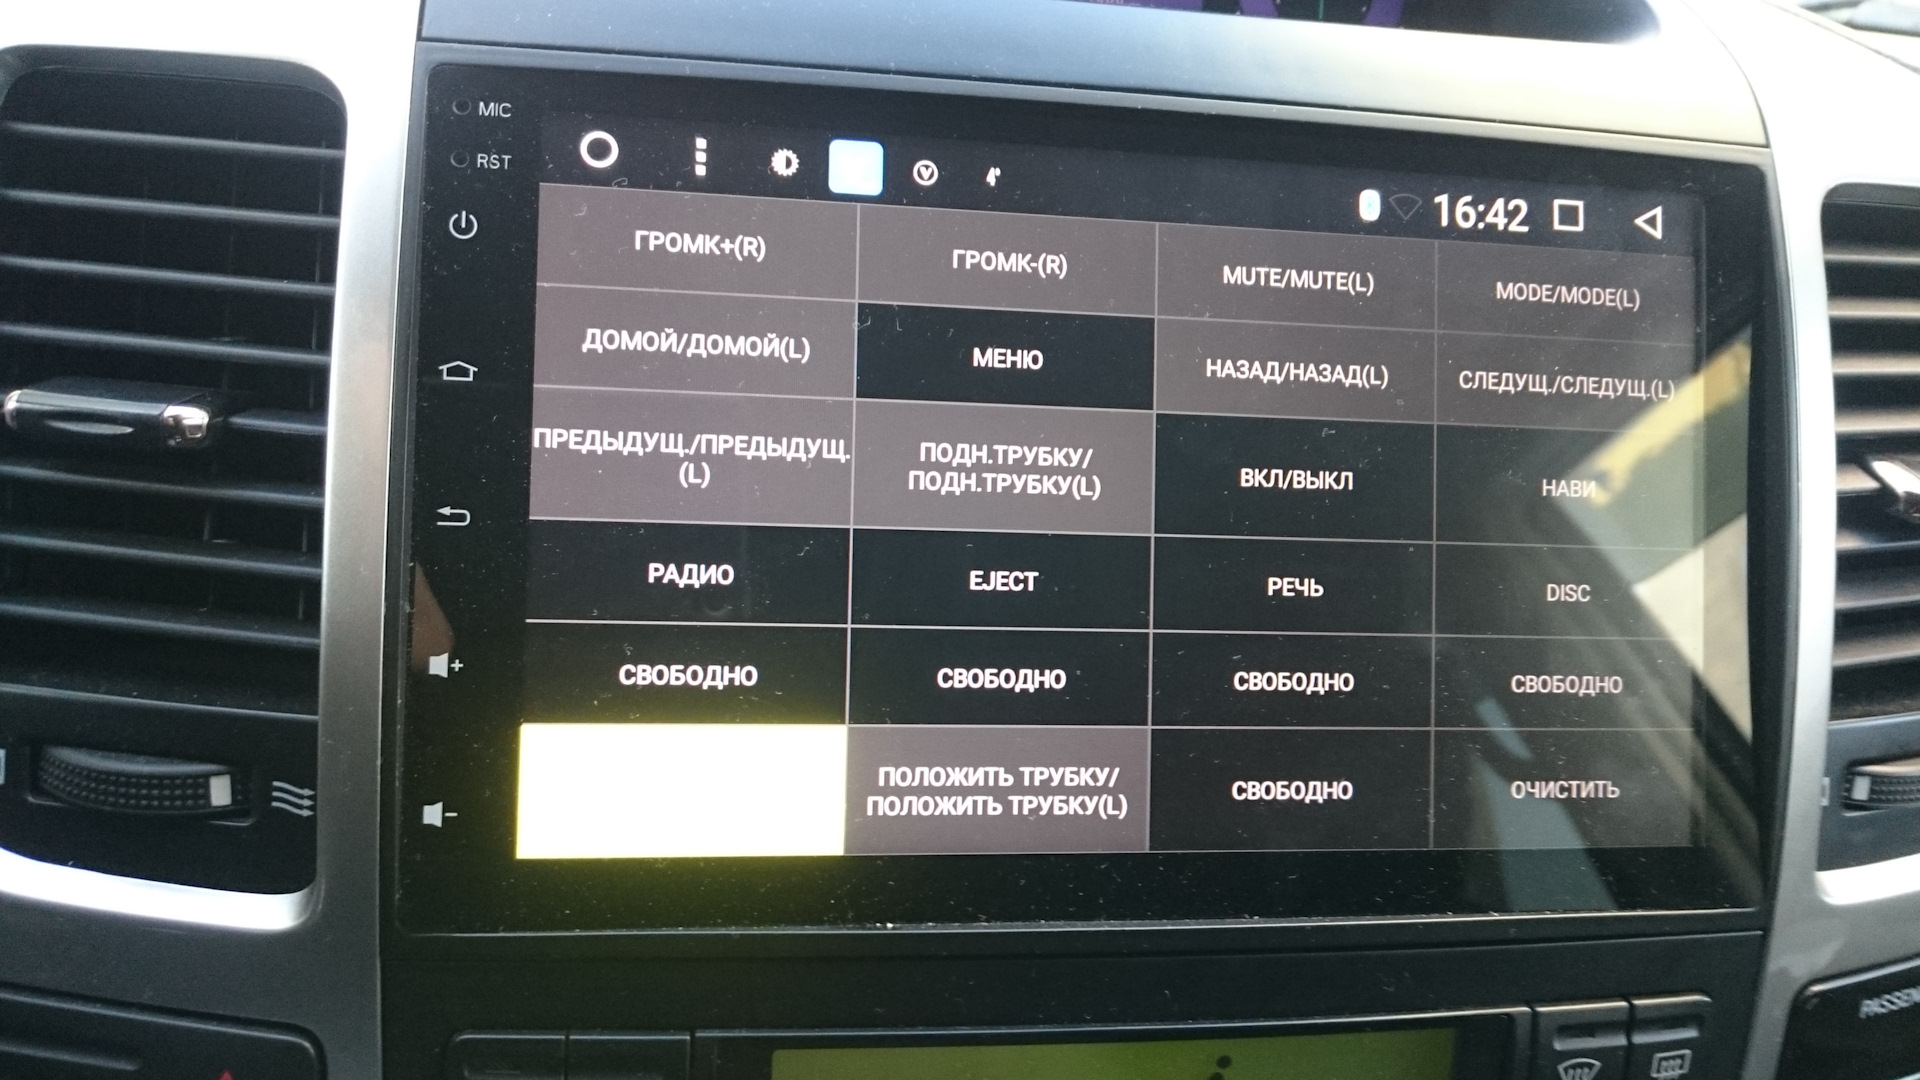 Магнитола андроид настройка приложений. Toyota Land Cruiser Prado 120 Android. Тойота Прадо 120 магнитола андроид. Настройки кнопок на руле. Программирование кнопок на руле андроид магнитолы.